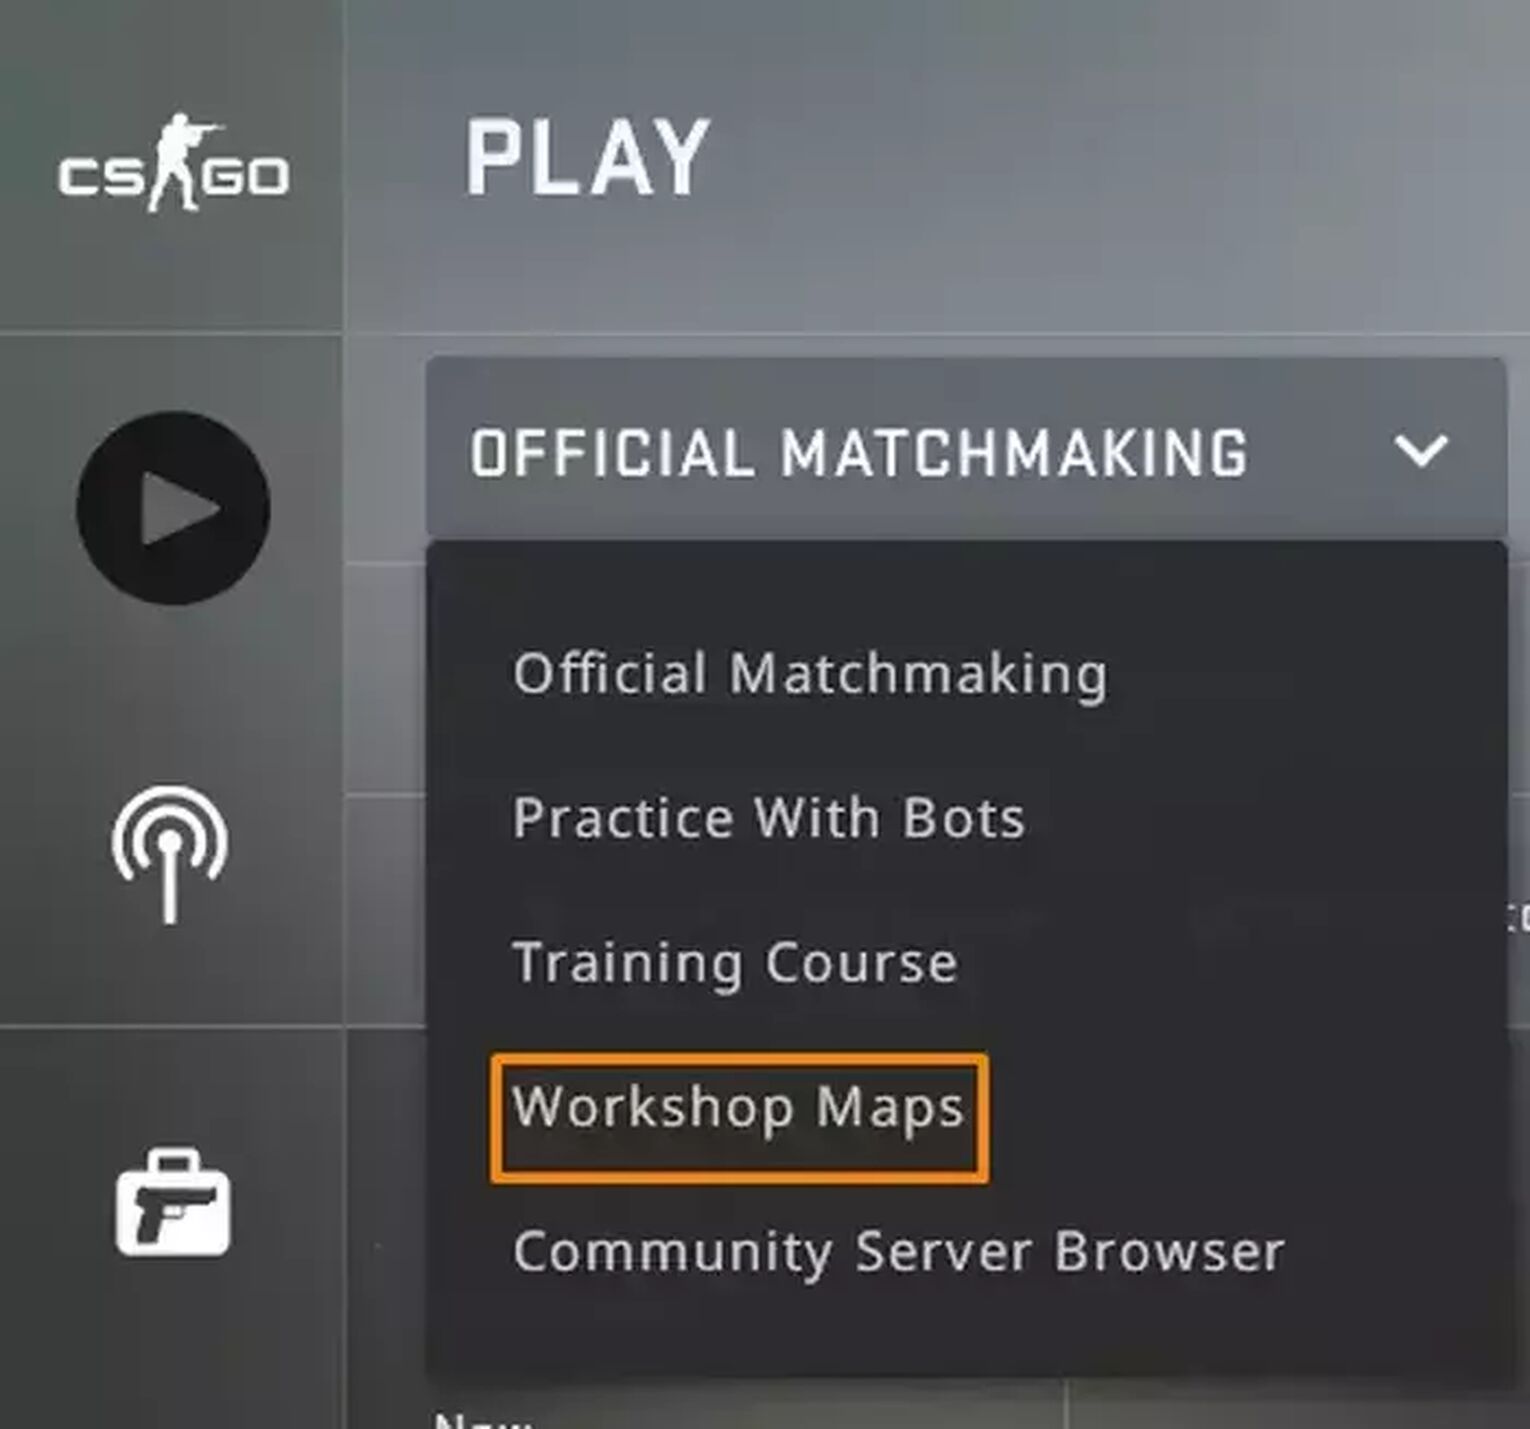 The best CS2 aim training maps - Dot Esports